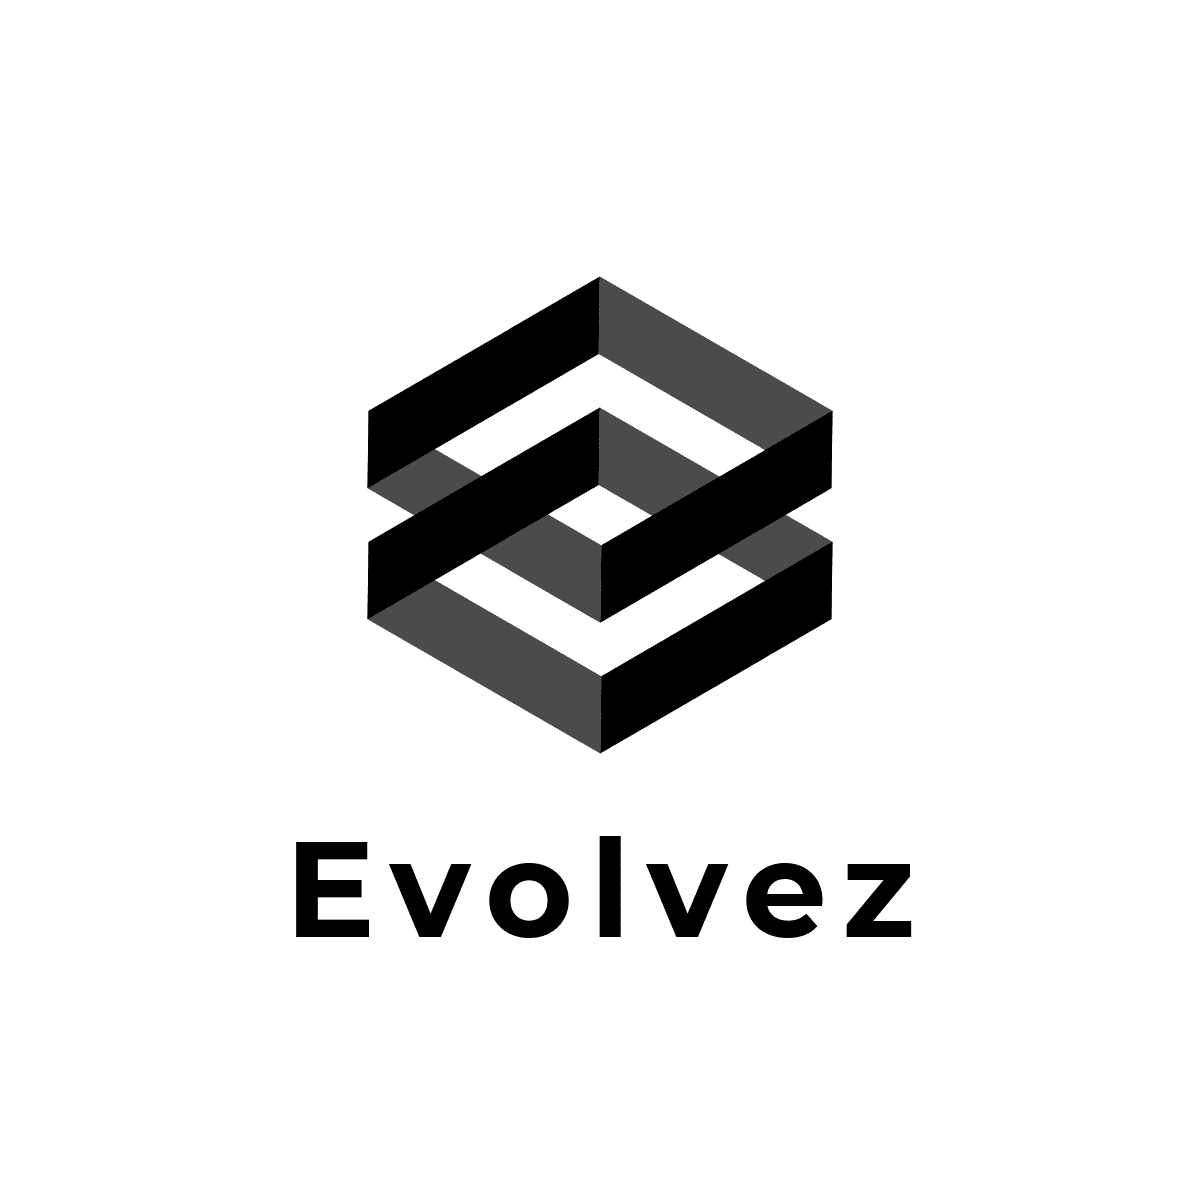 EvolveZ: Brand Ambassador Agency